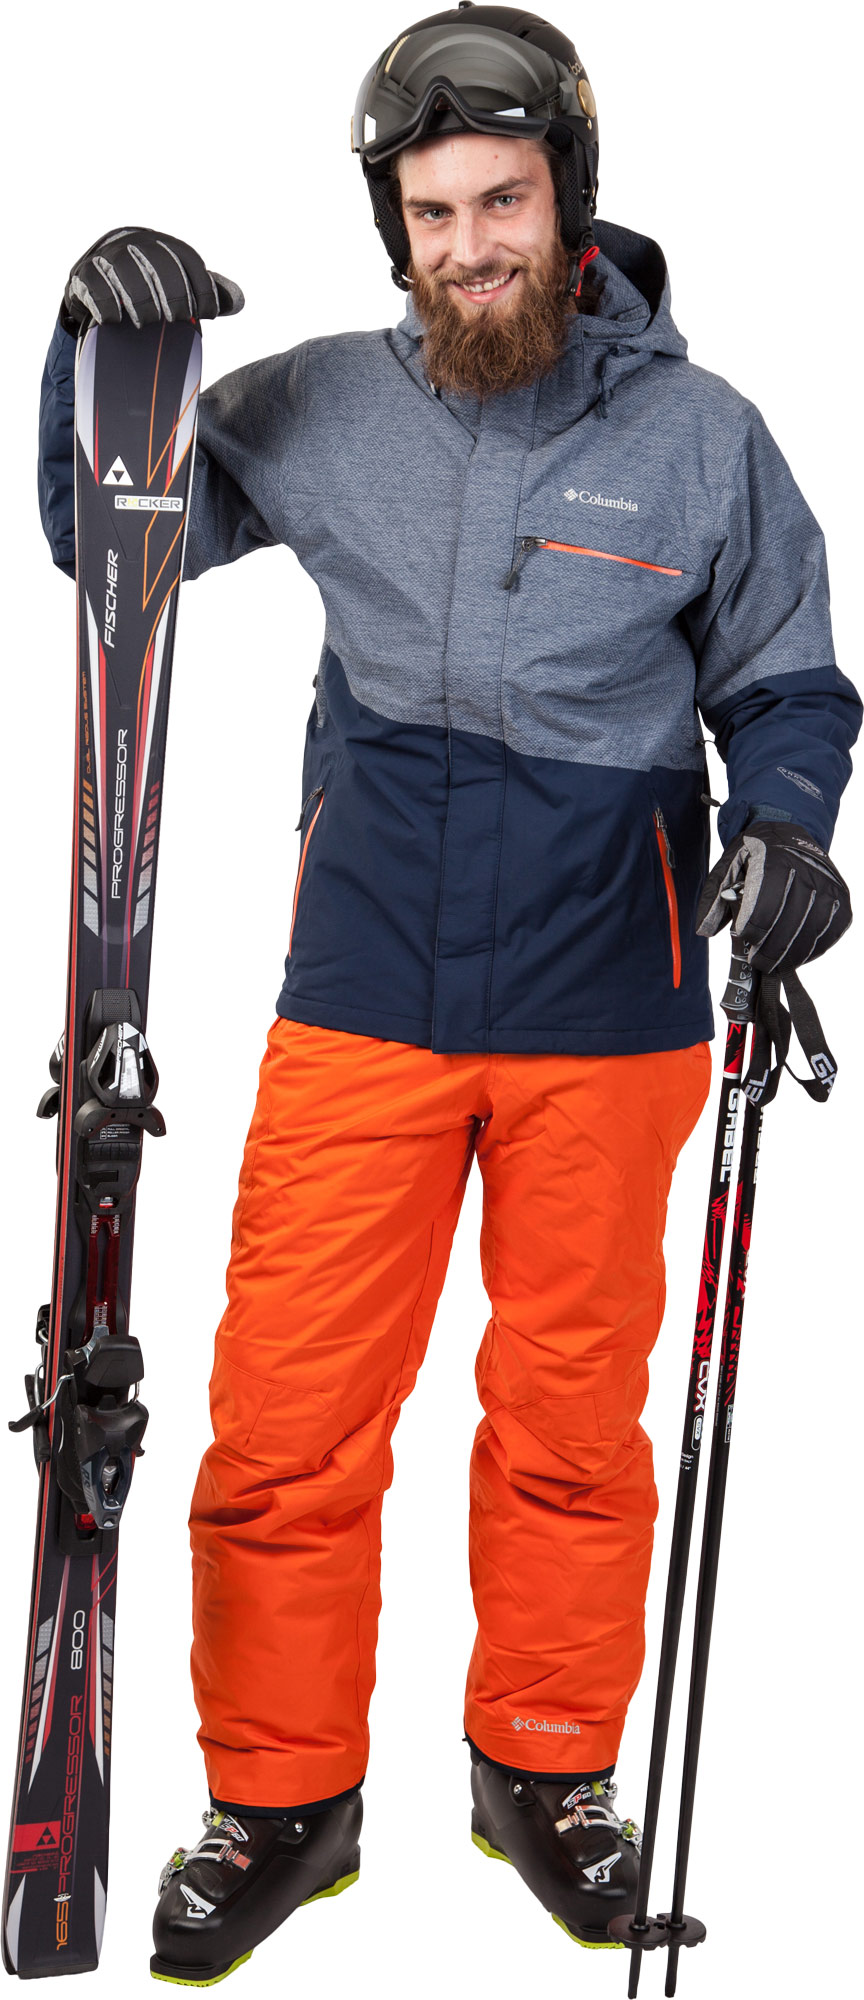 Men’s ski jacket